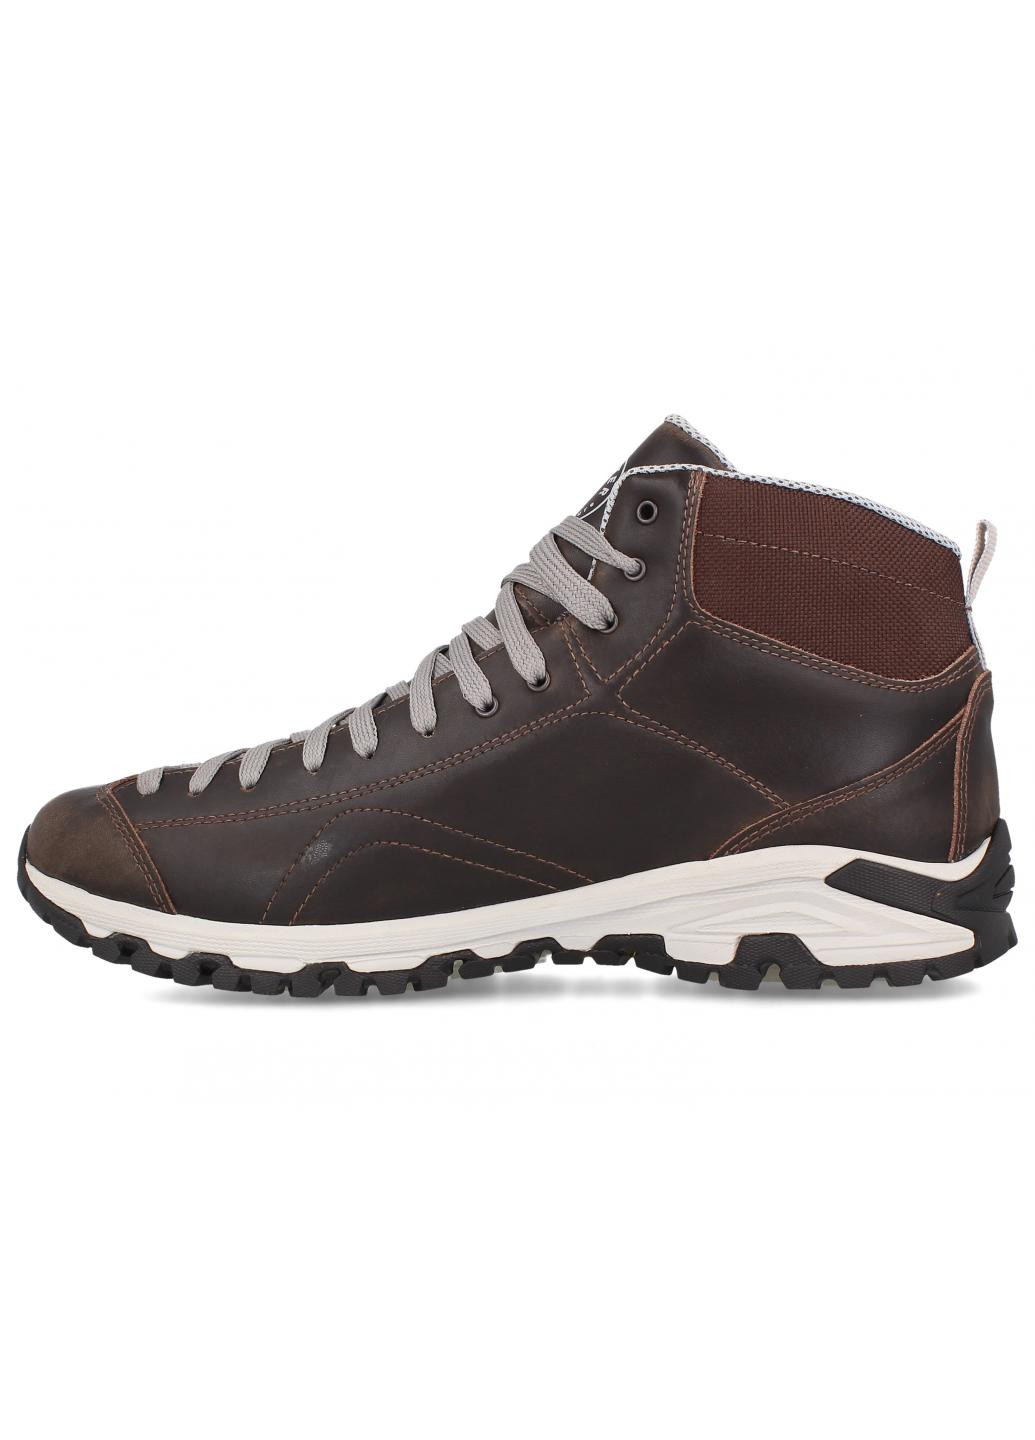 Коричневые зимние мужские ботинки brown vibram 247951-45 made in italy Forester